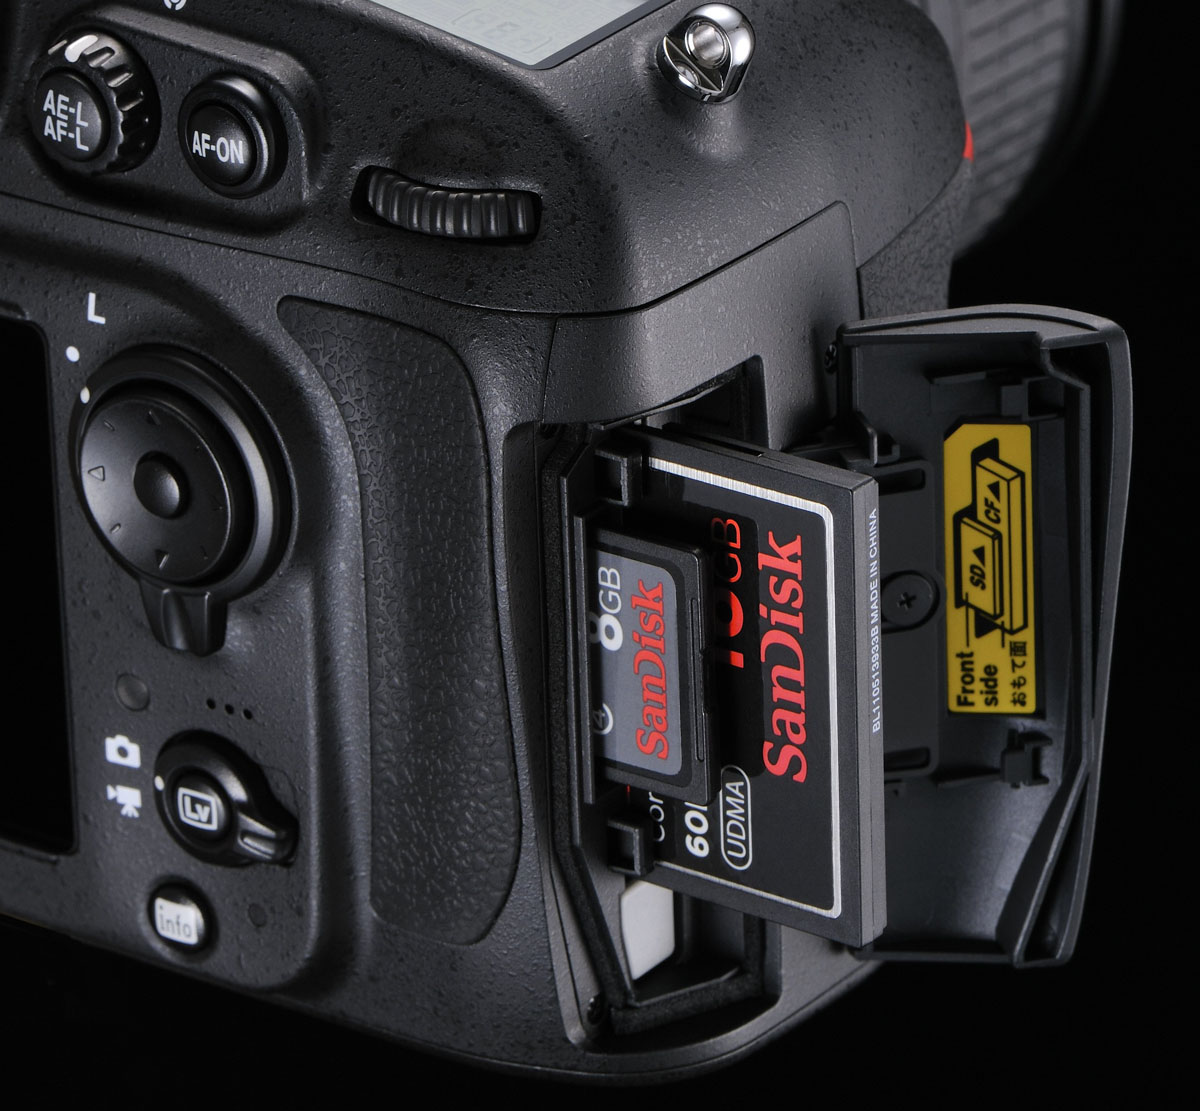 CompactFlash Card Compatibility with Nikon D800 | Nikon D800